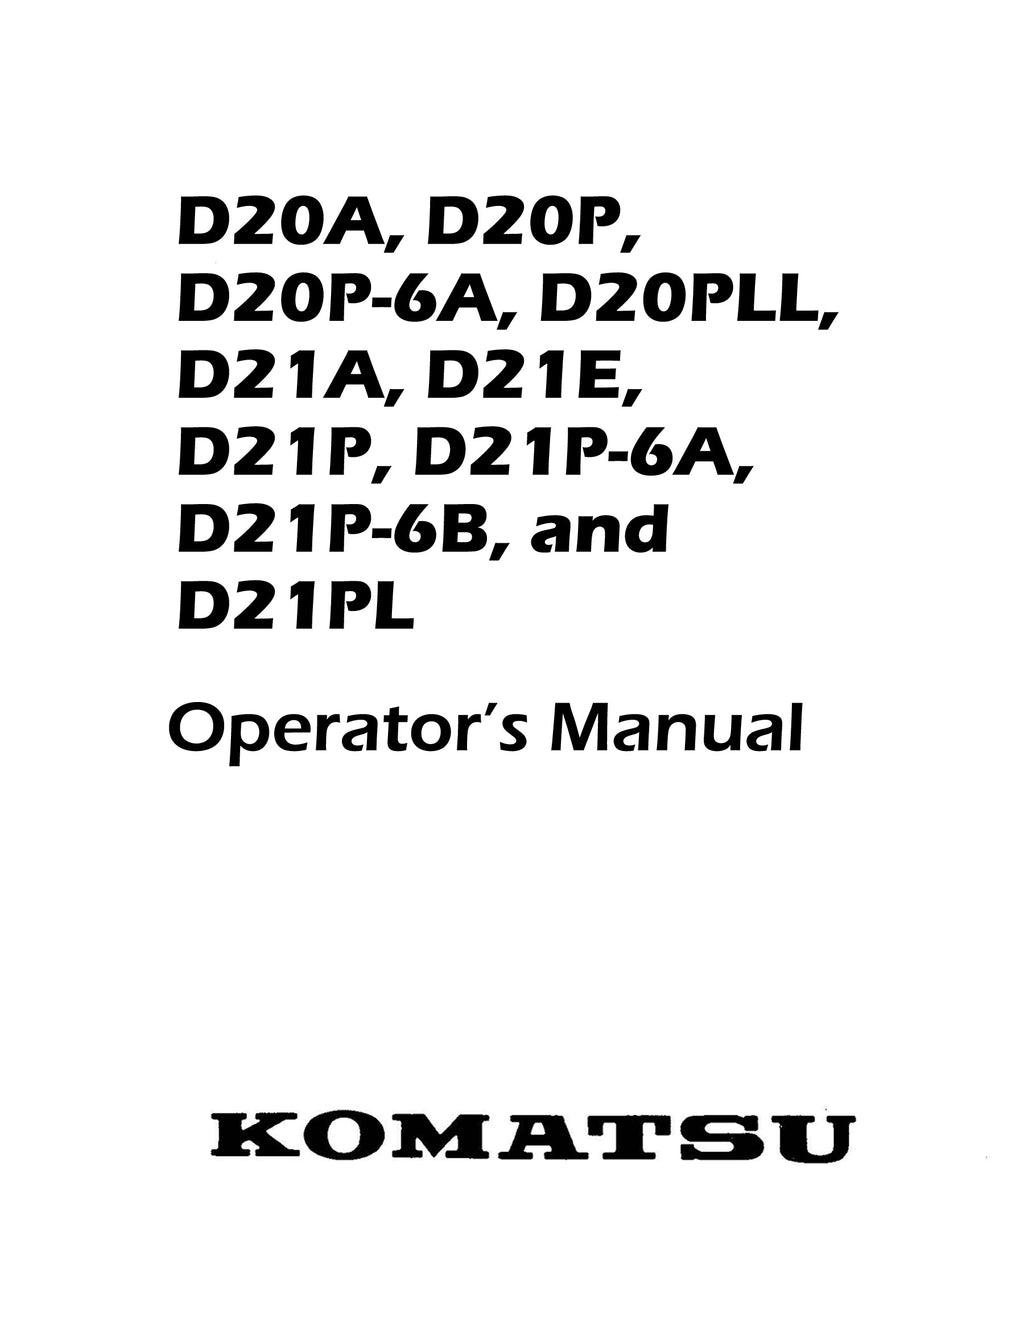 Komatsu d20a-6 service manual